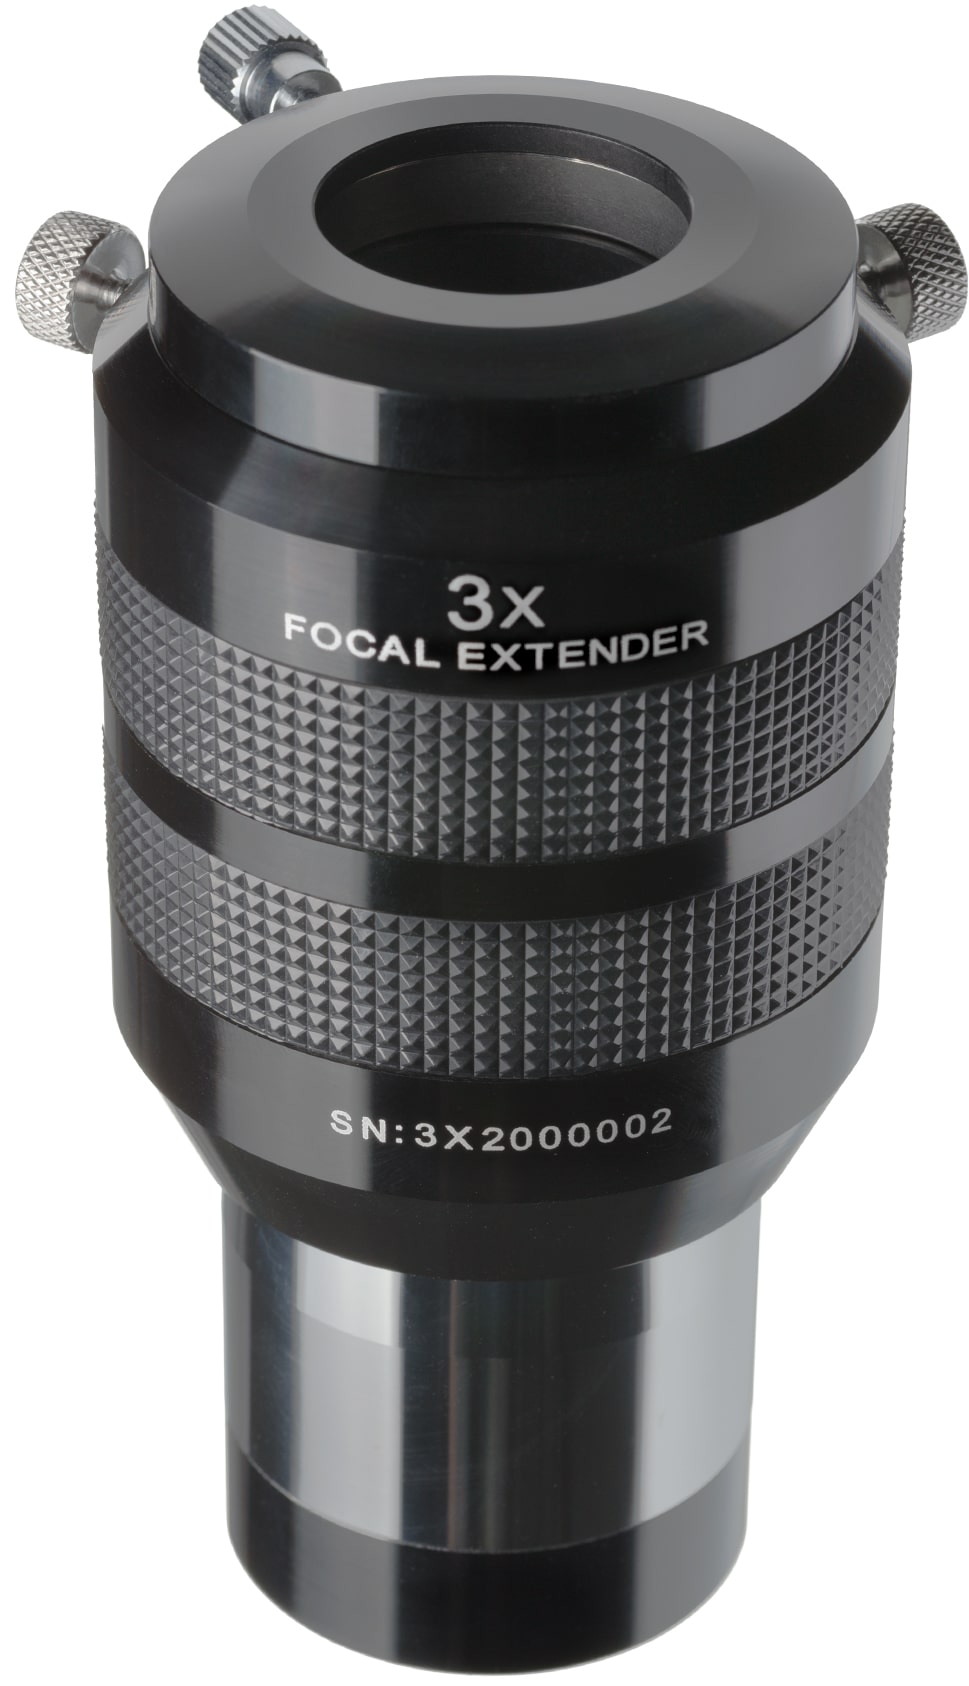  Four-lens 2" Premium-Teleextender with extension factor 3x [EN]
 
   